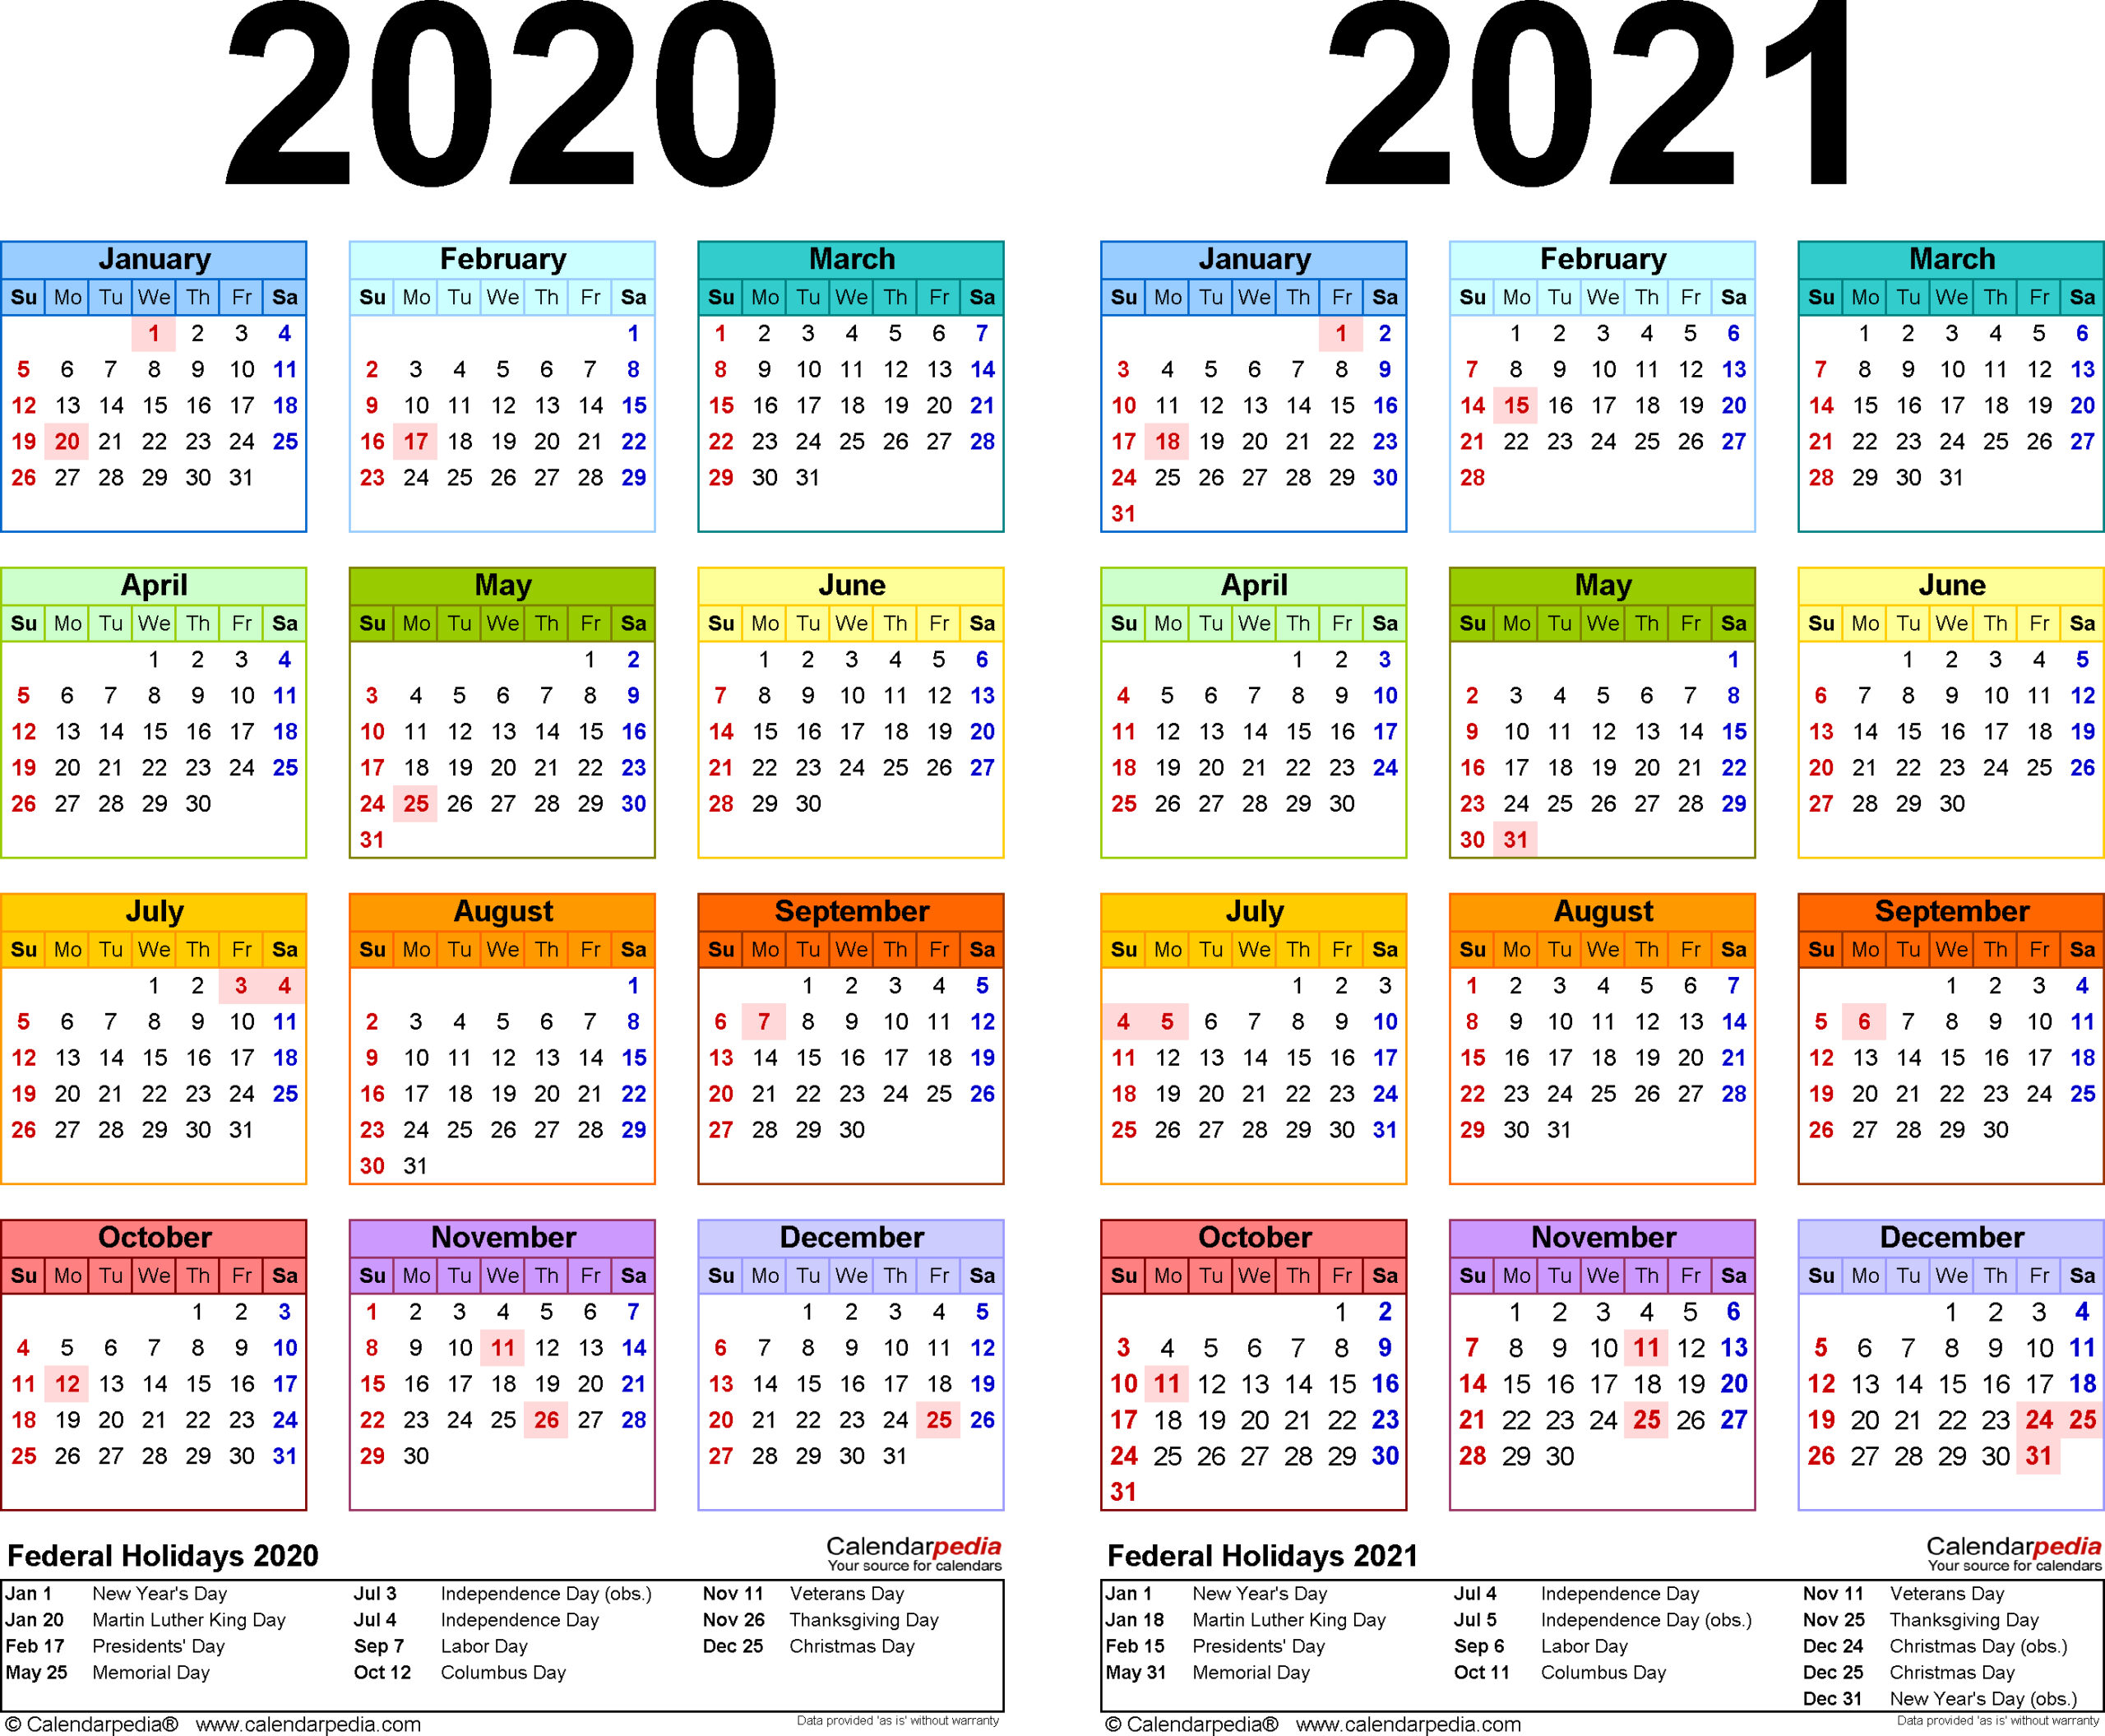 Calendarpedia 2020 Excel | Calendar For Planning